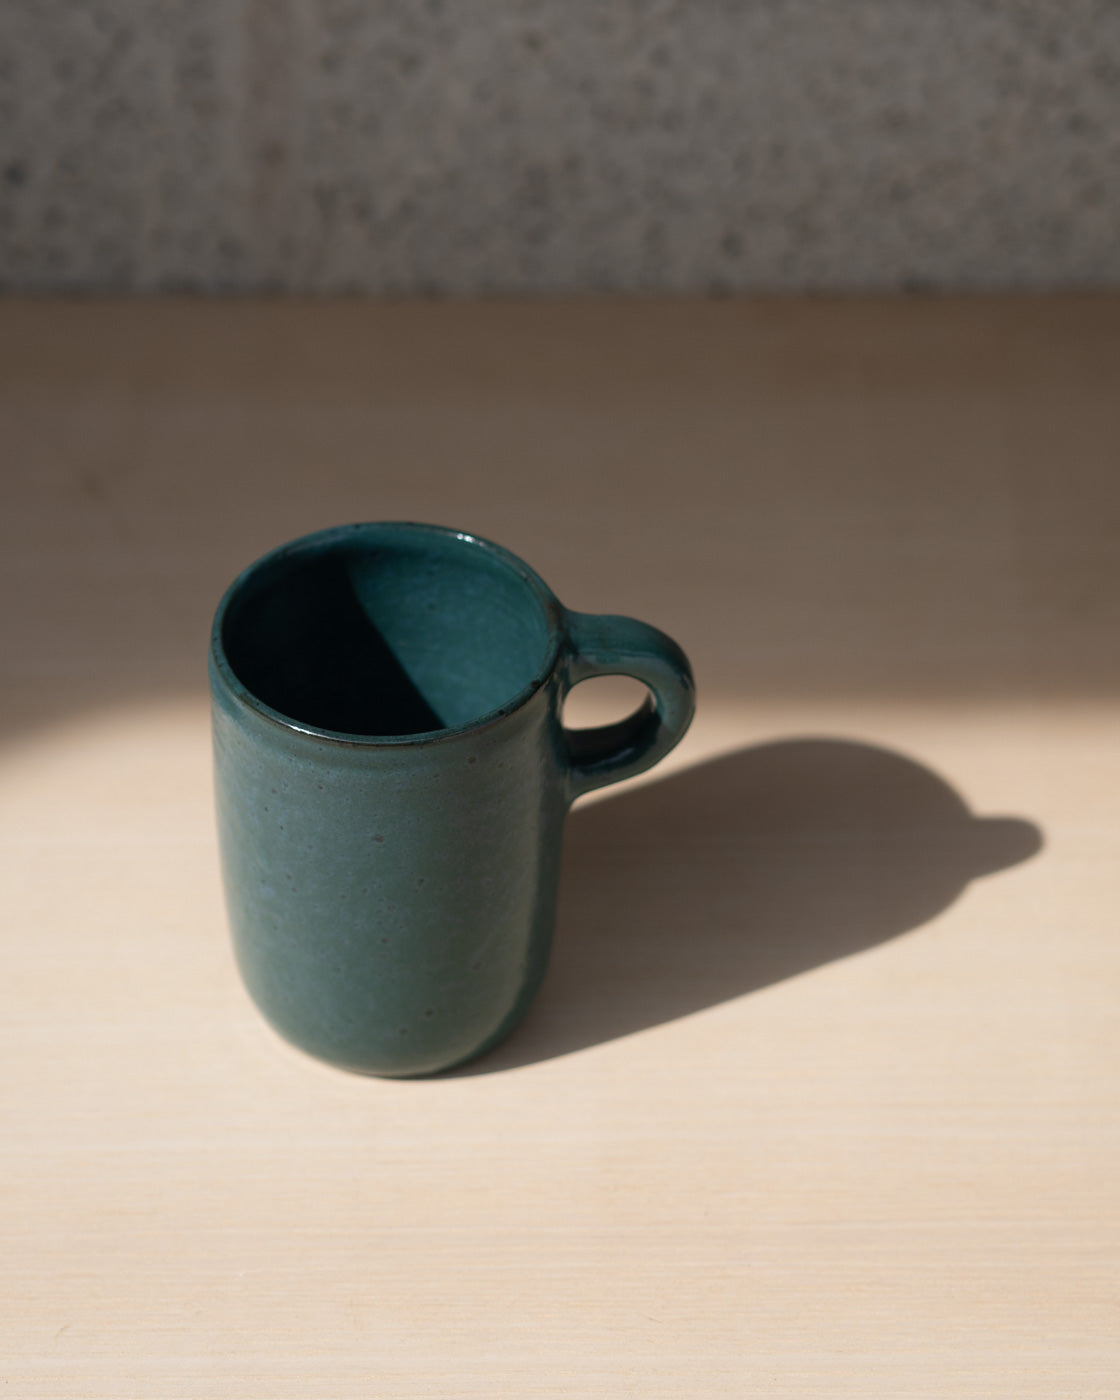 Emerald Green ceramic mug by Gaëlle Le Doledec